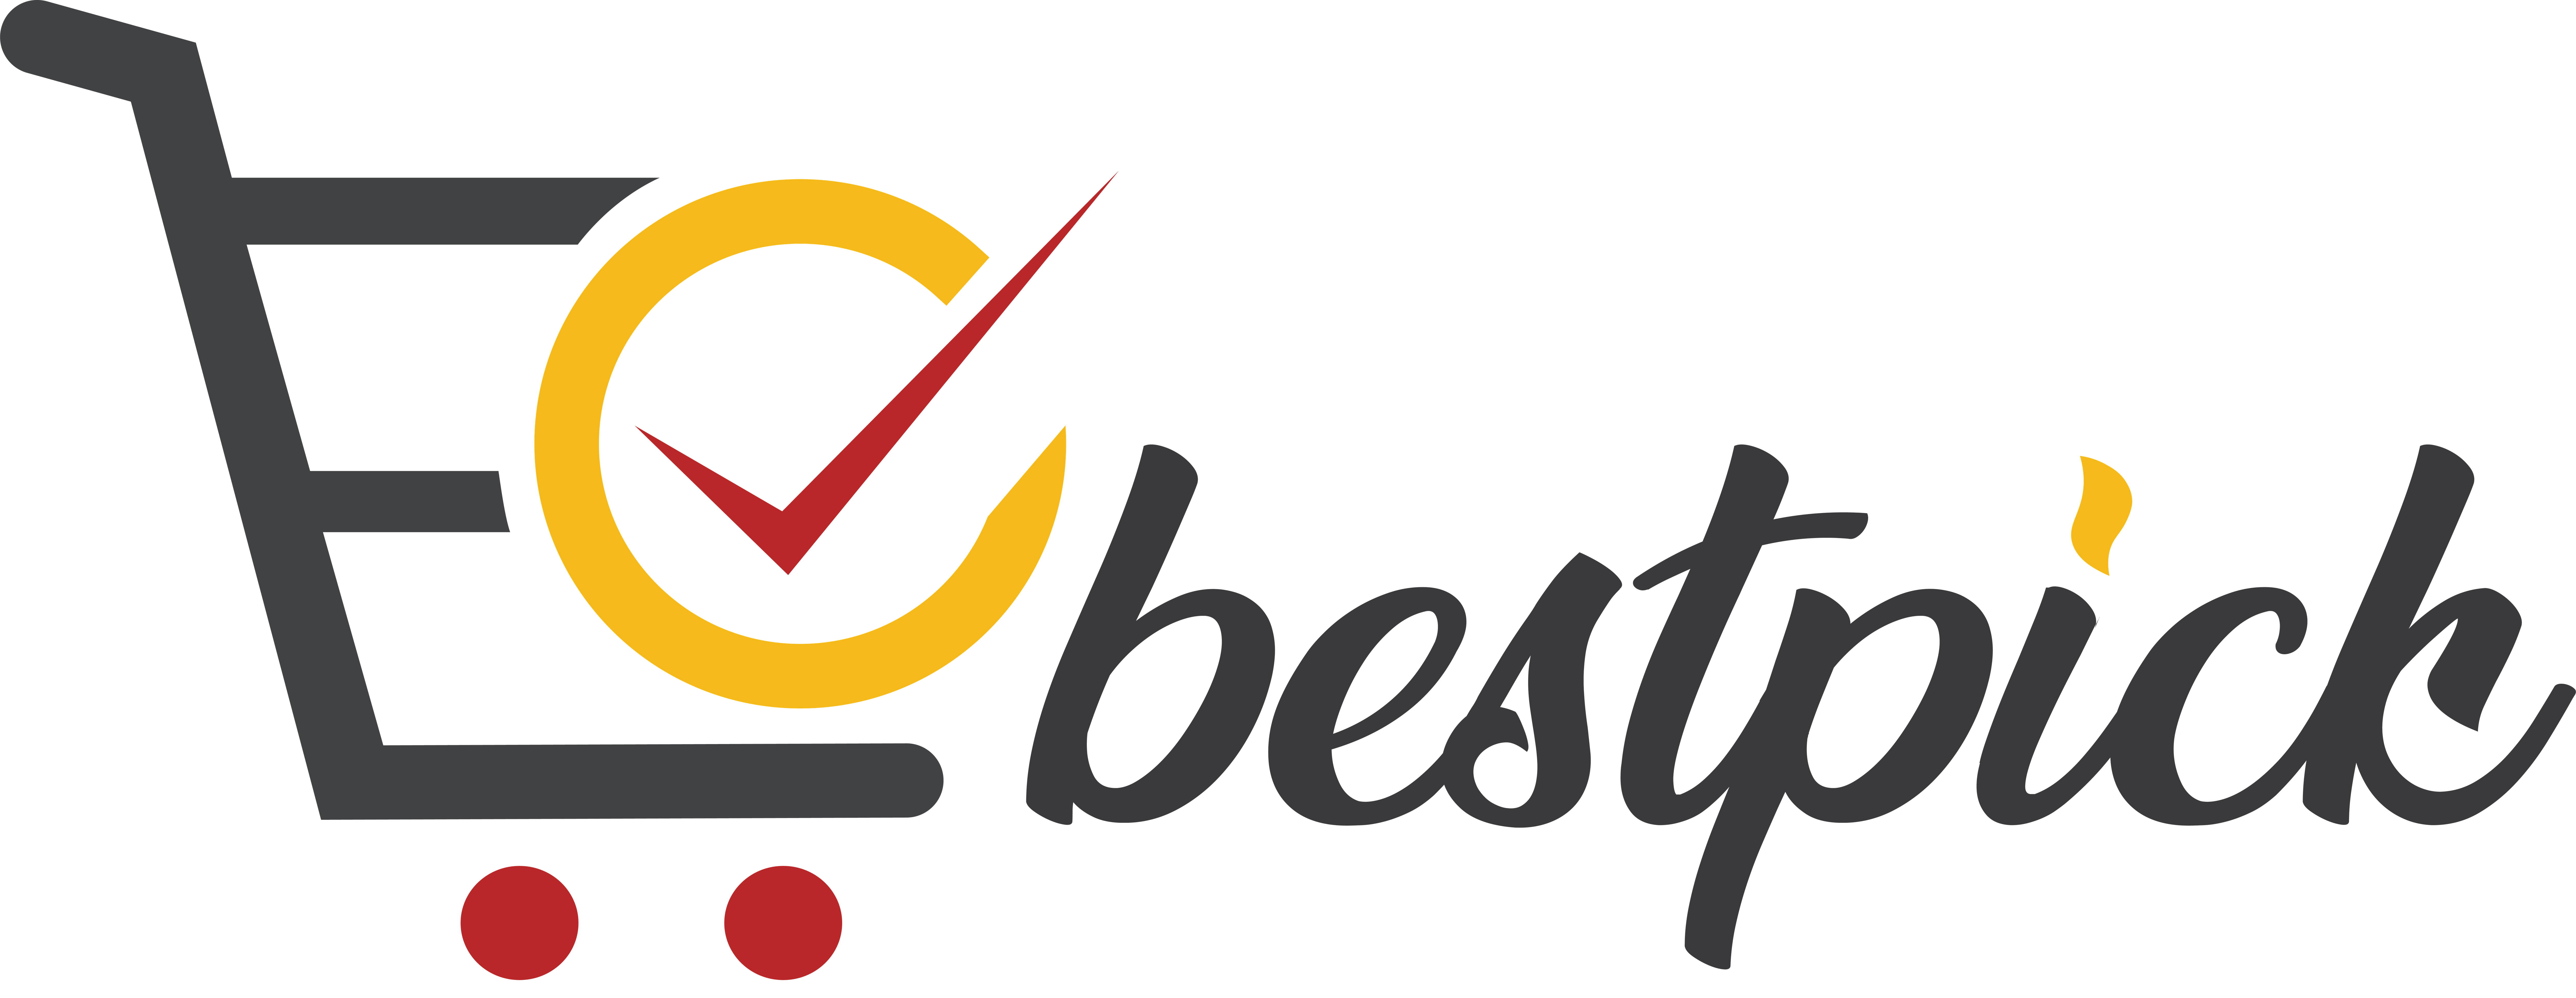 Ebestpick logo